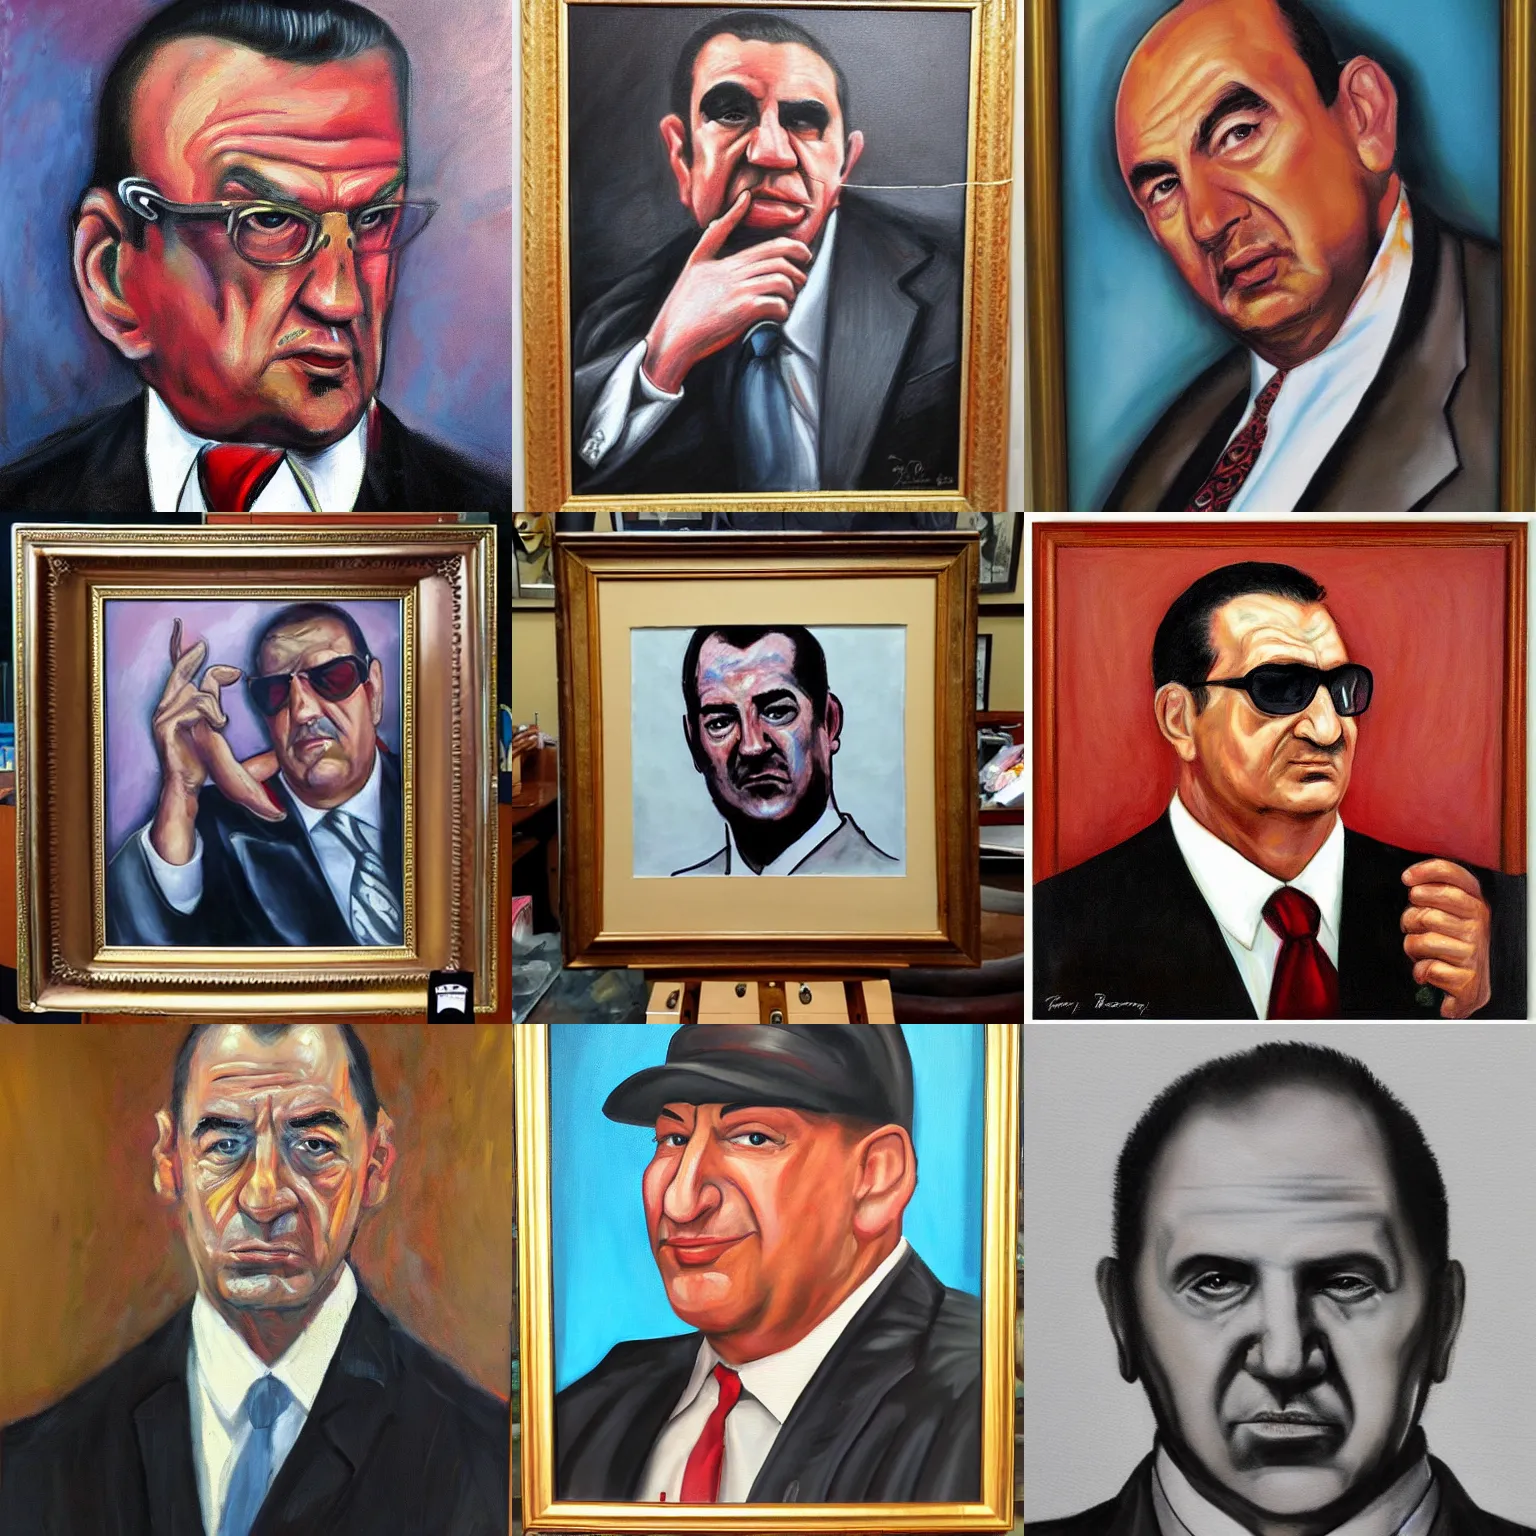 Prompt: Tony Baloney, the world’s largest mafia crime boss, portrait painting.